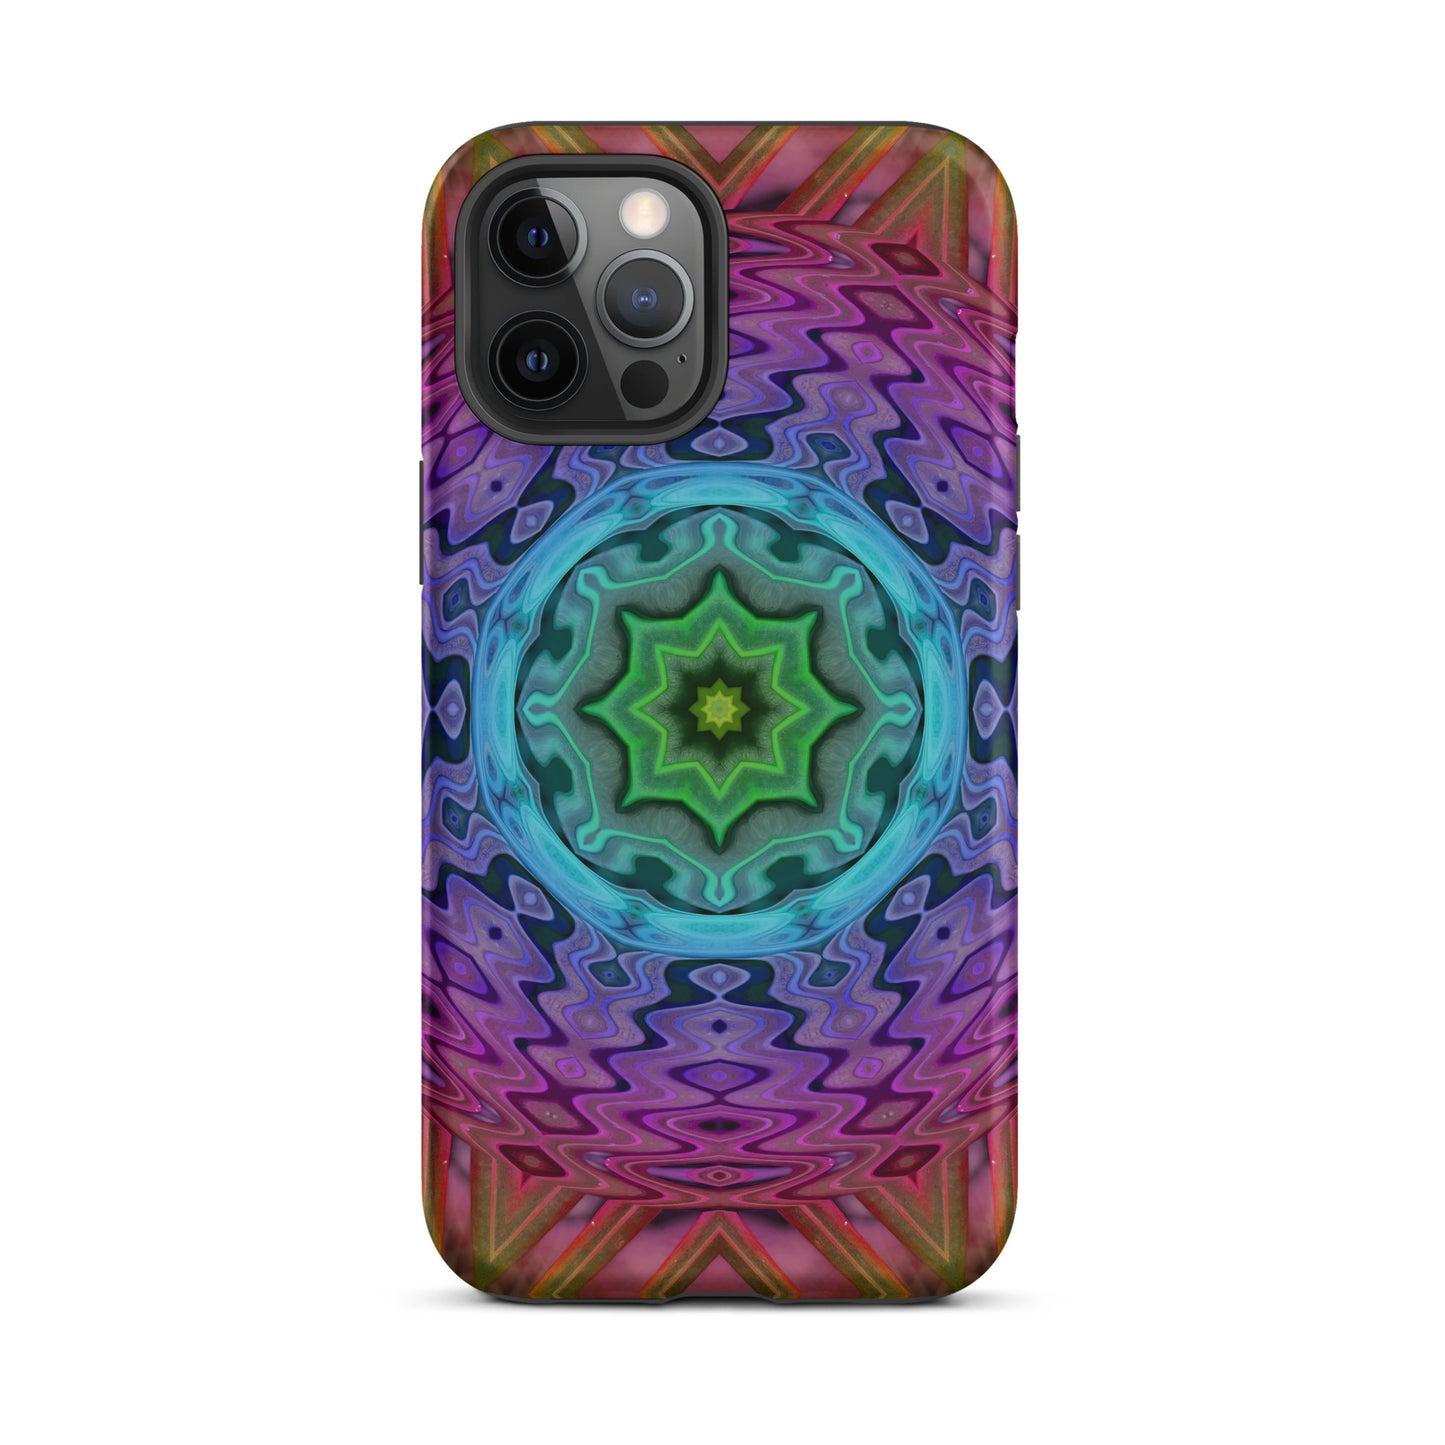 "Rainbow Abode" Tough iPhone case